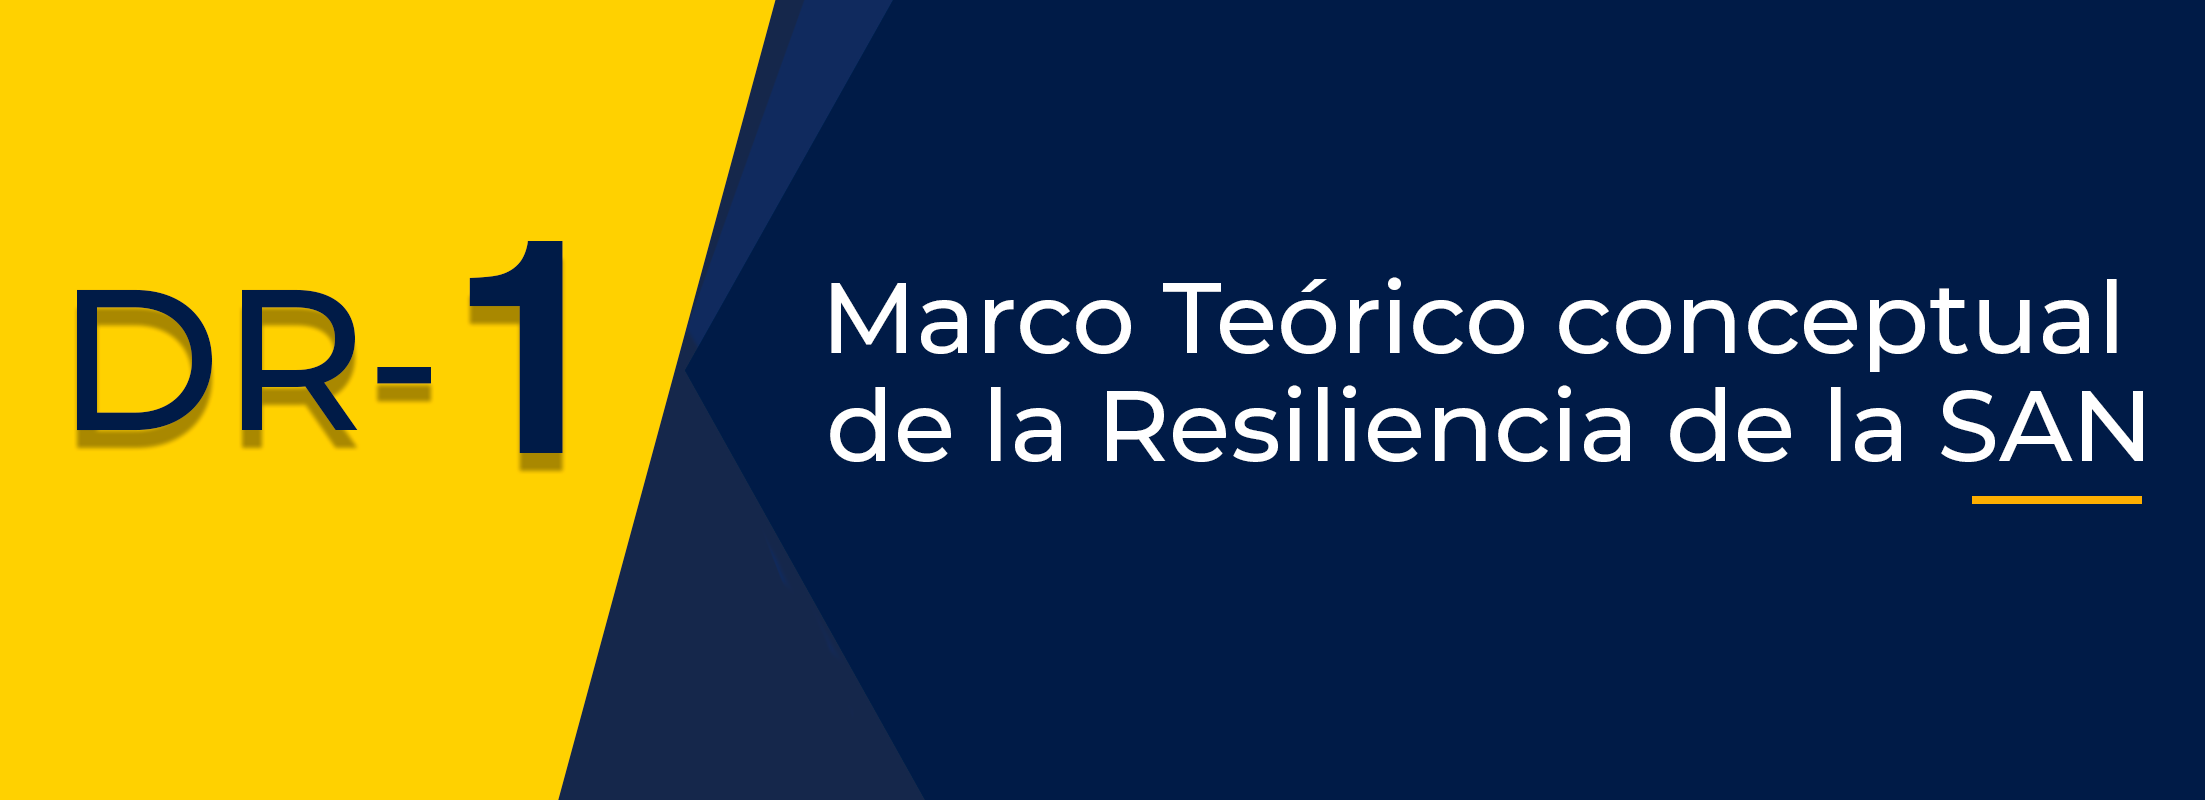  DR 1. Marco teórico conceptual de la resiliencia de la SAN (DIRESAN IV-2023)